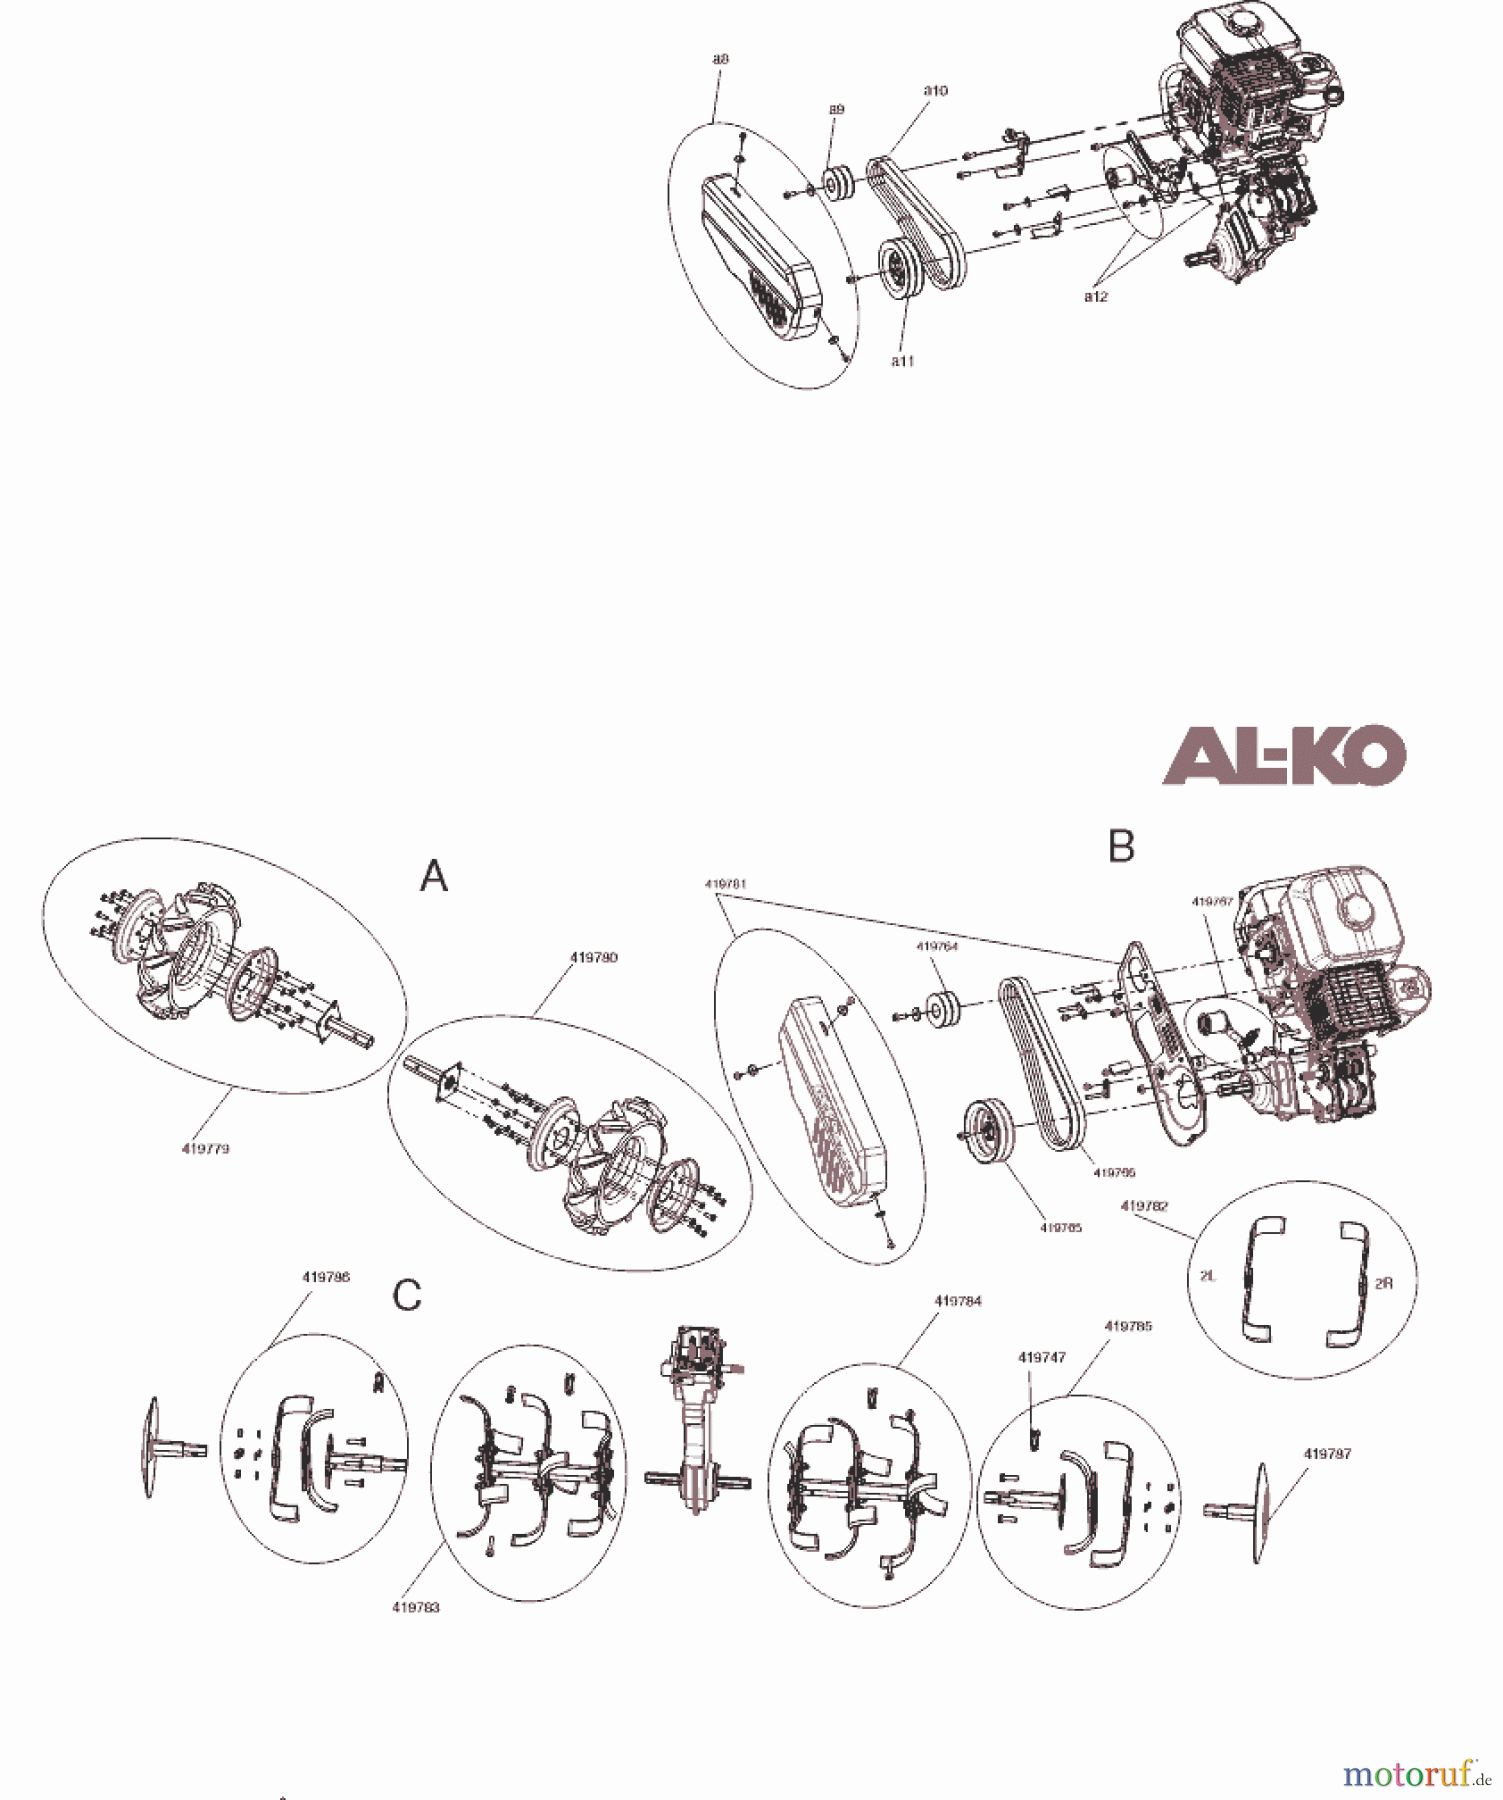  AL-KO Gartentechnik Motorhacken 113972  10/2021 - 02/2022 Seite 2